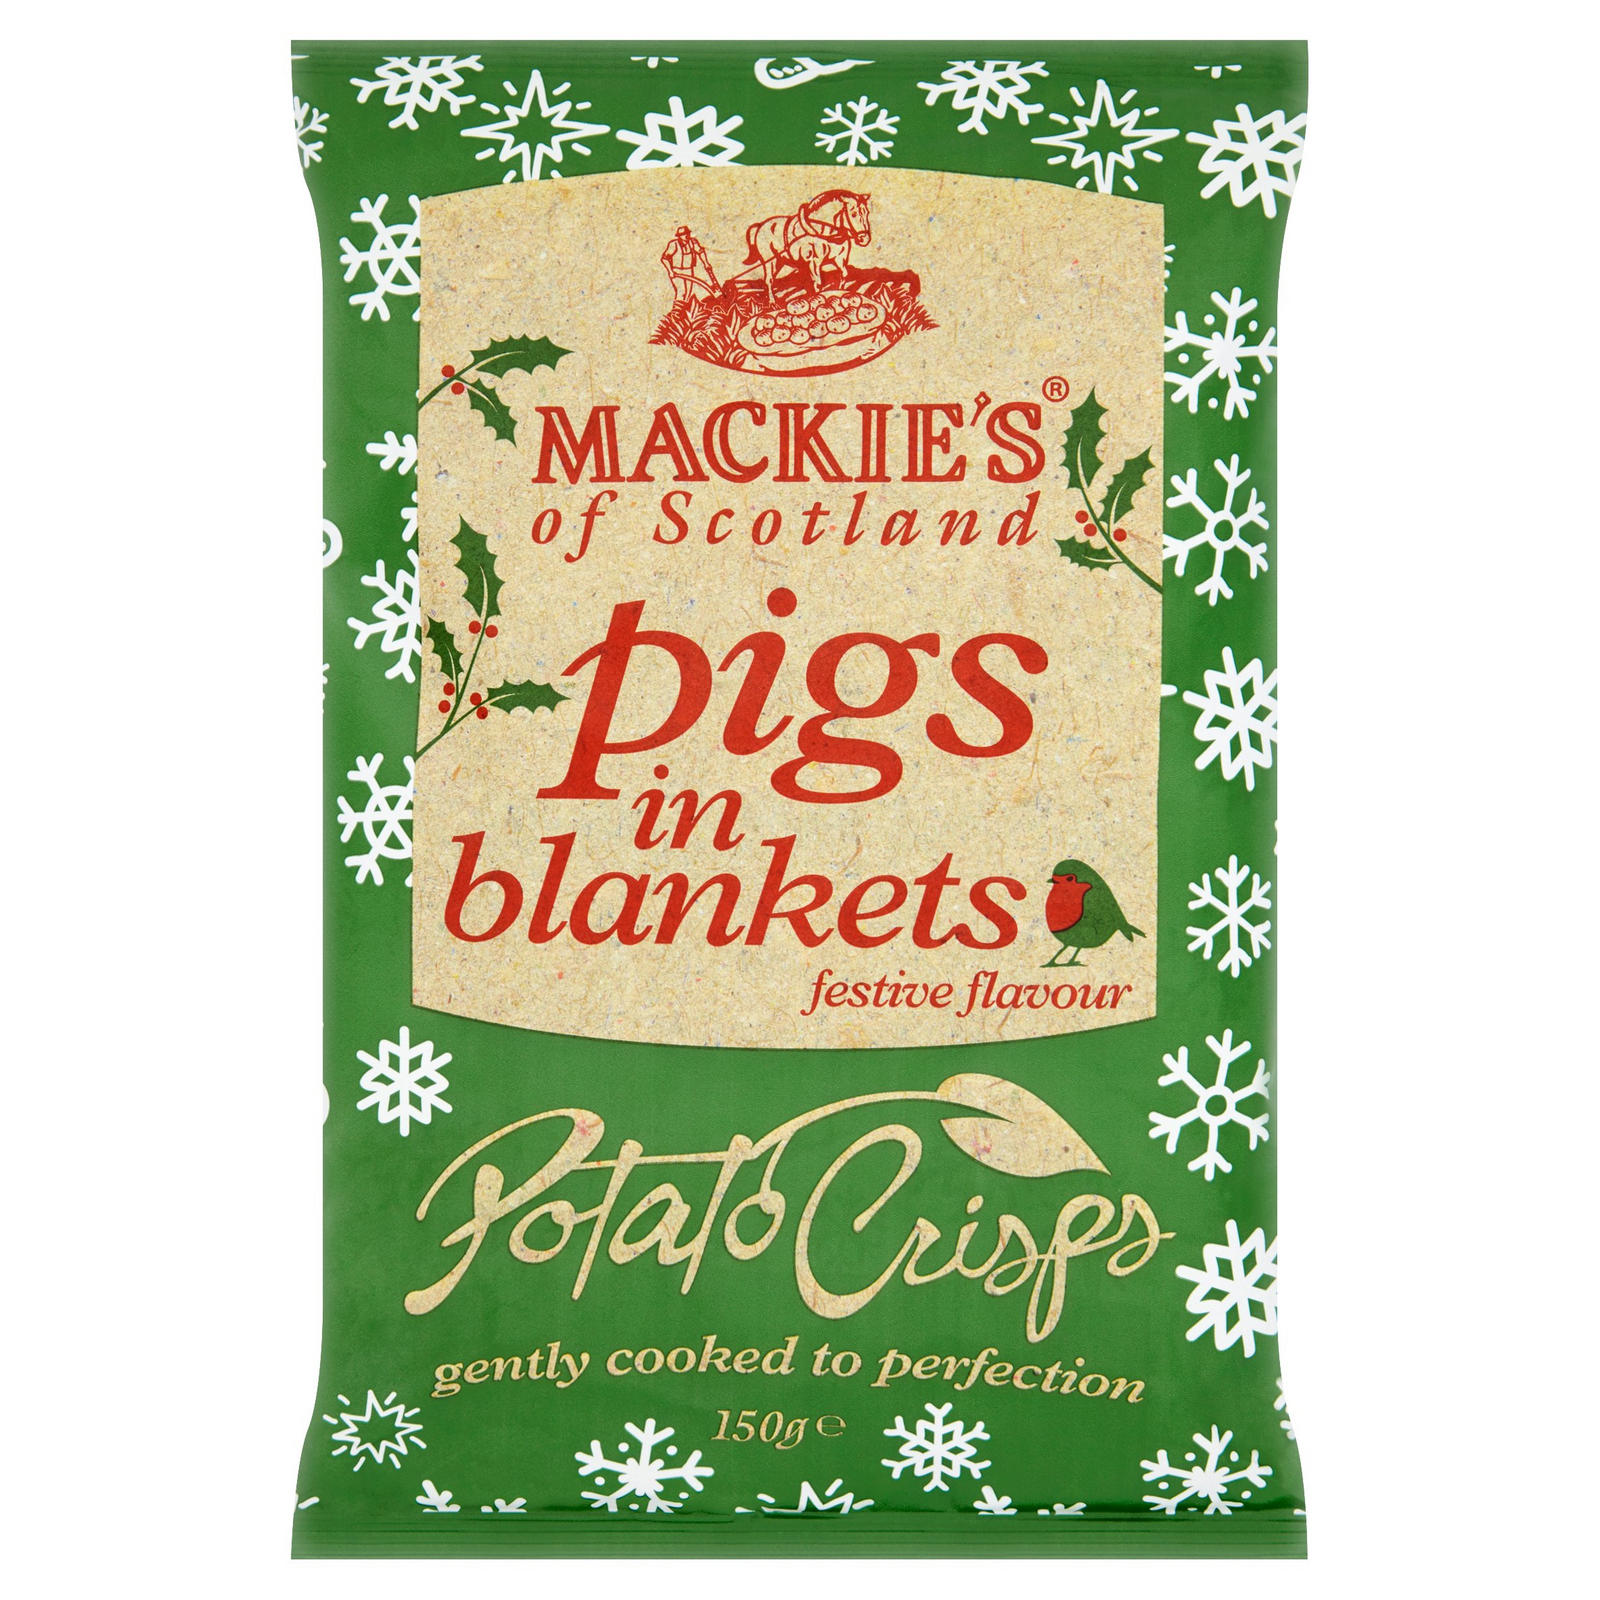 Mackie's of Scotland Pigs in Blankets Festive Flavour Potato Crisps 150g